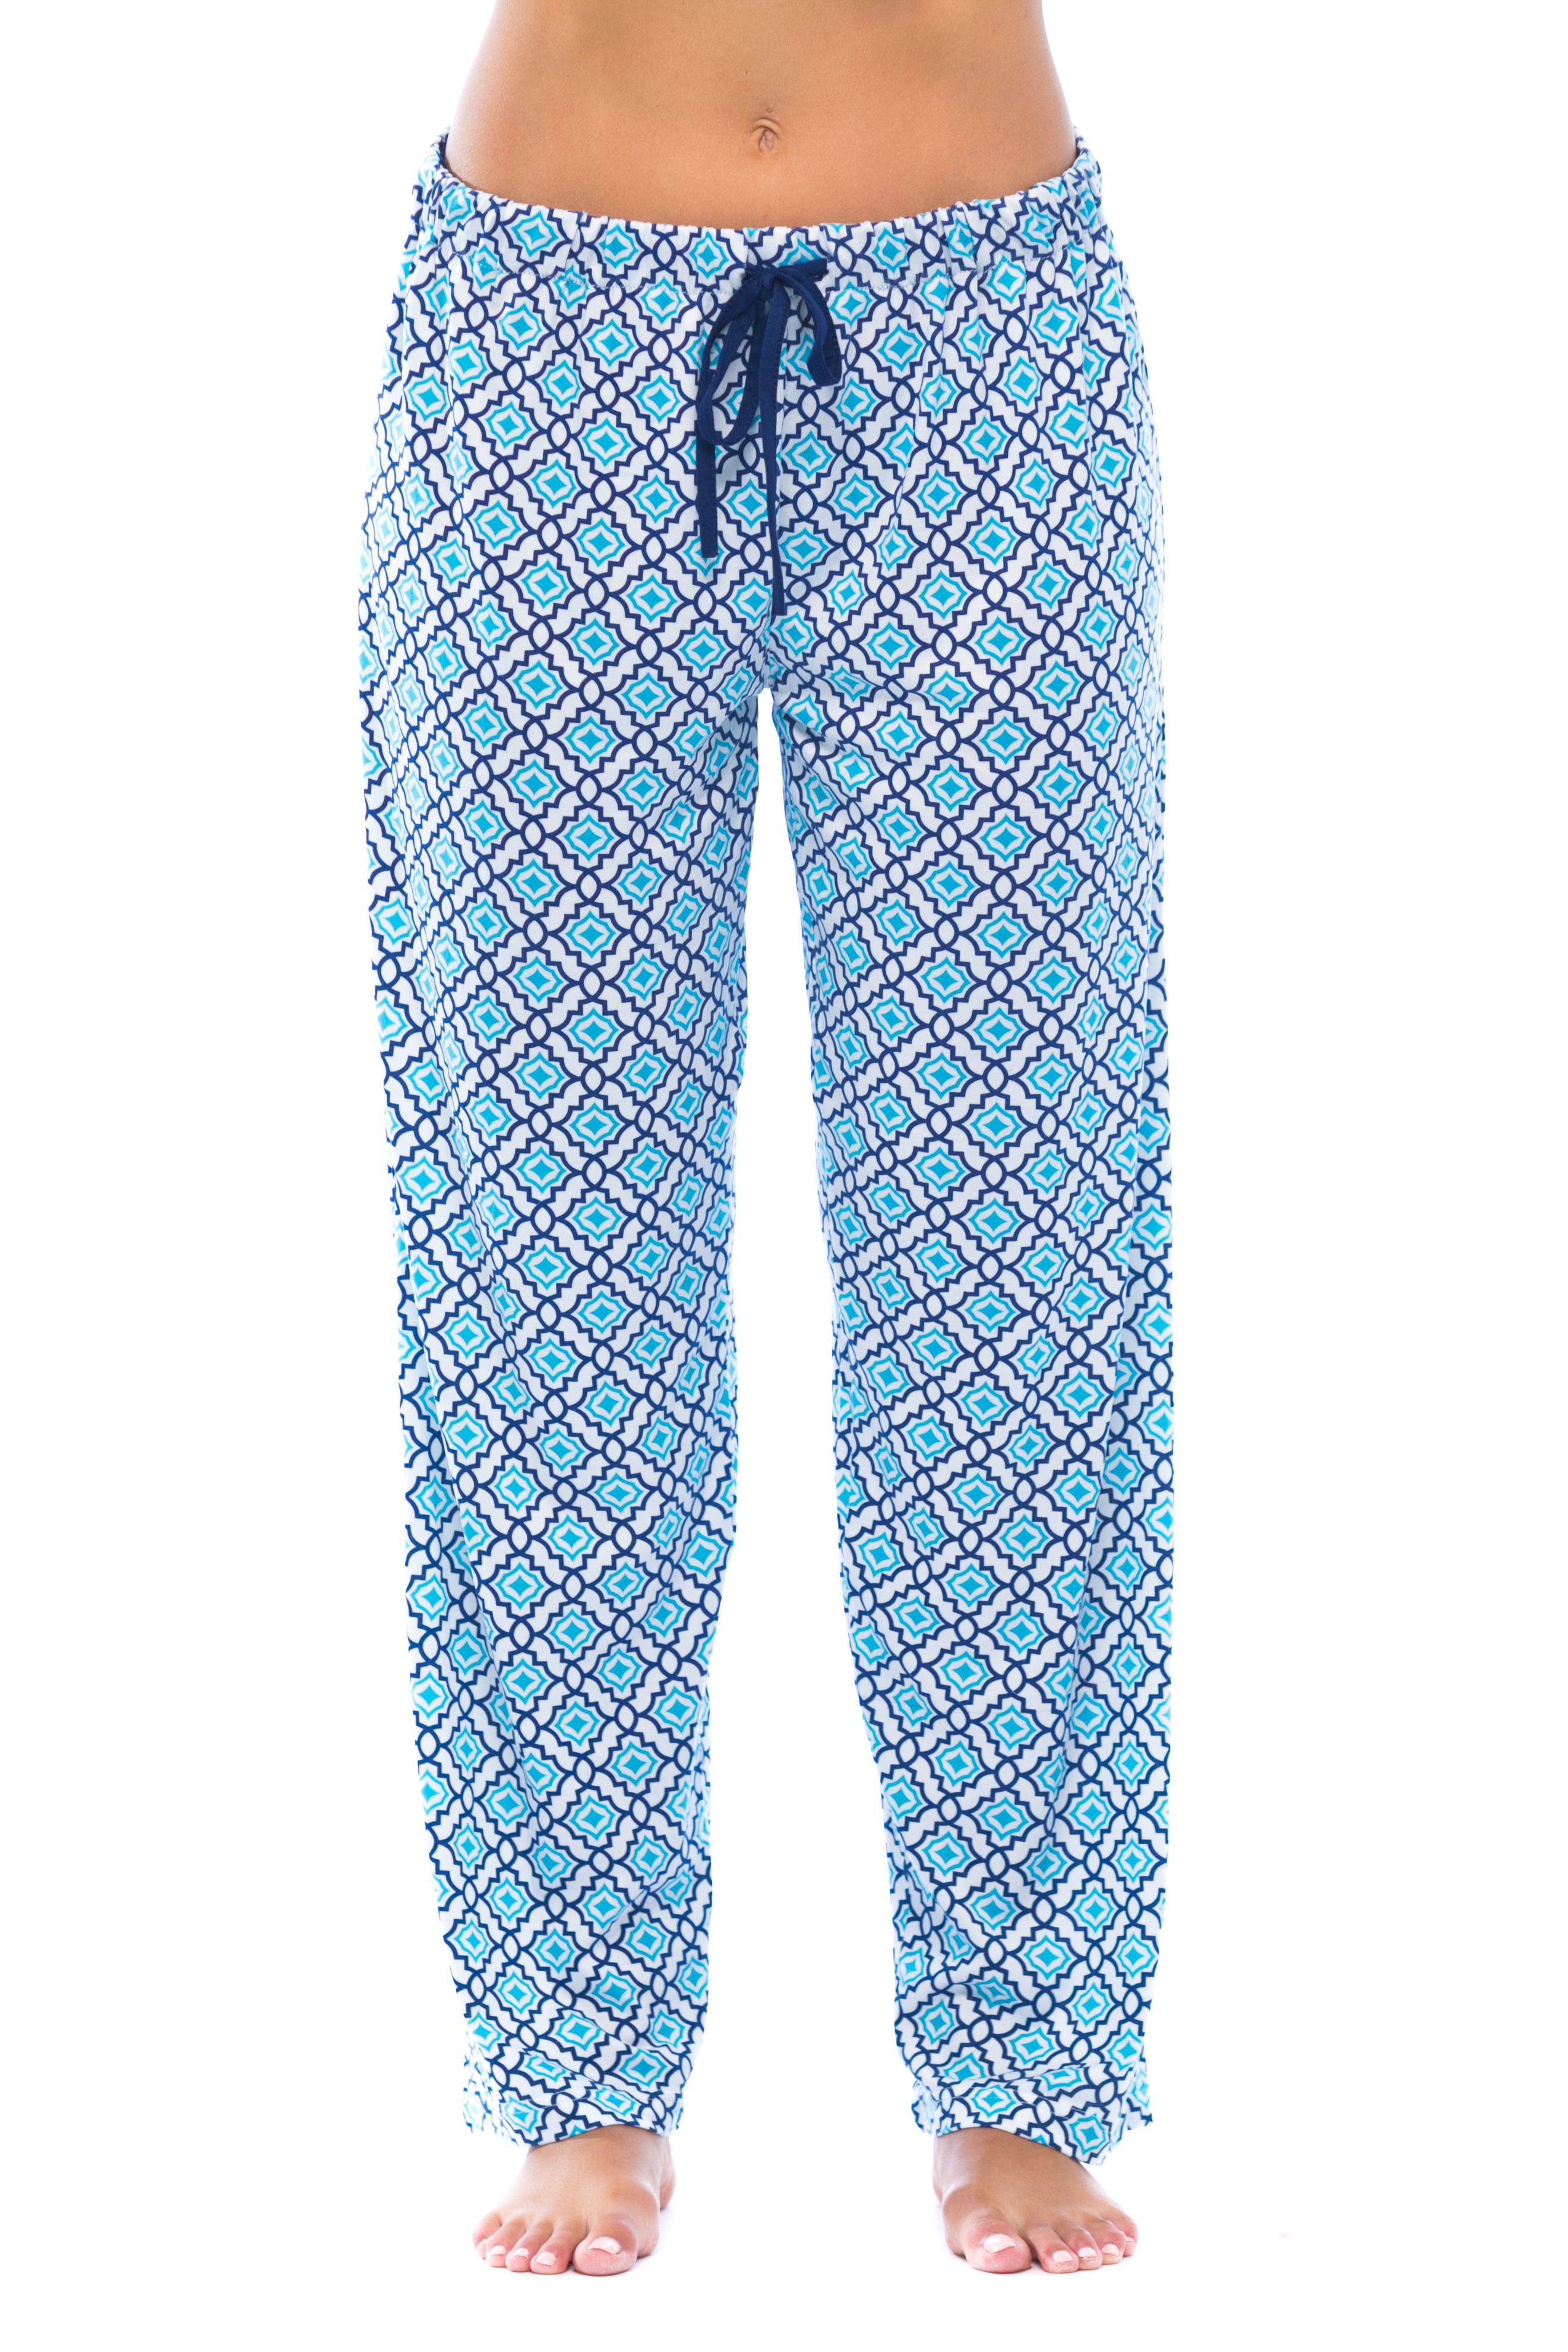 Just Love Women Pajama Pants / PJs / Sleepwear (Trellis Diamond Turq ...